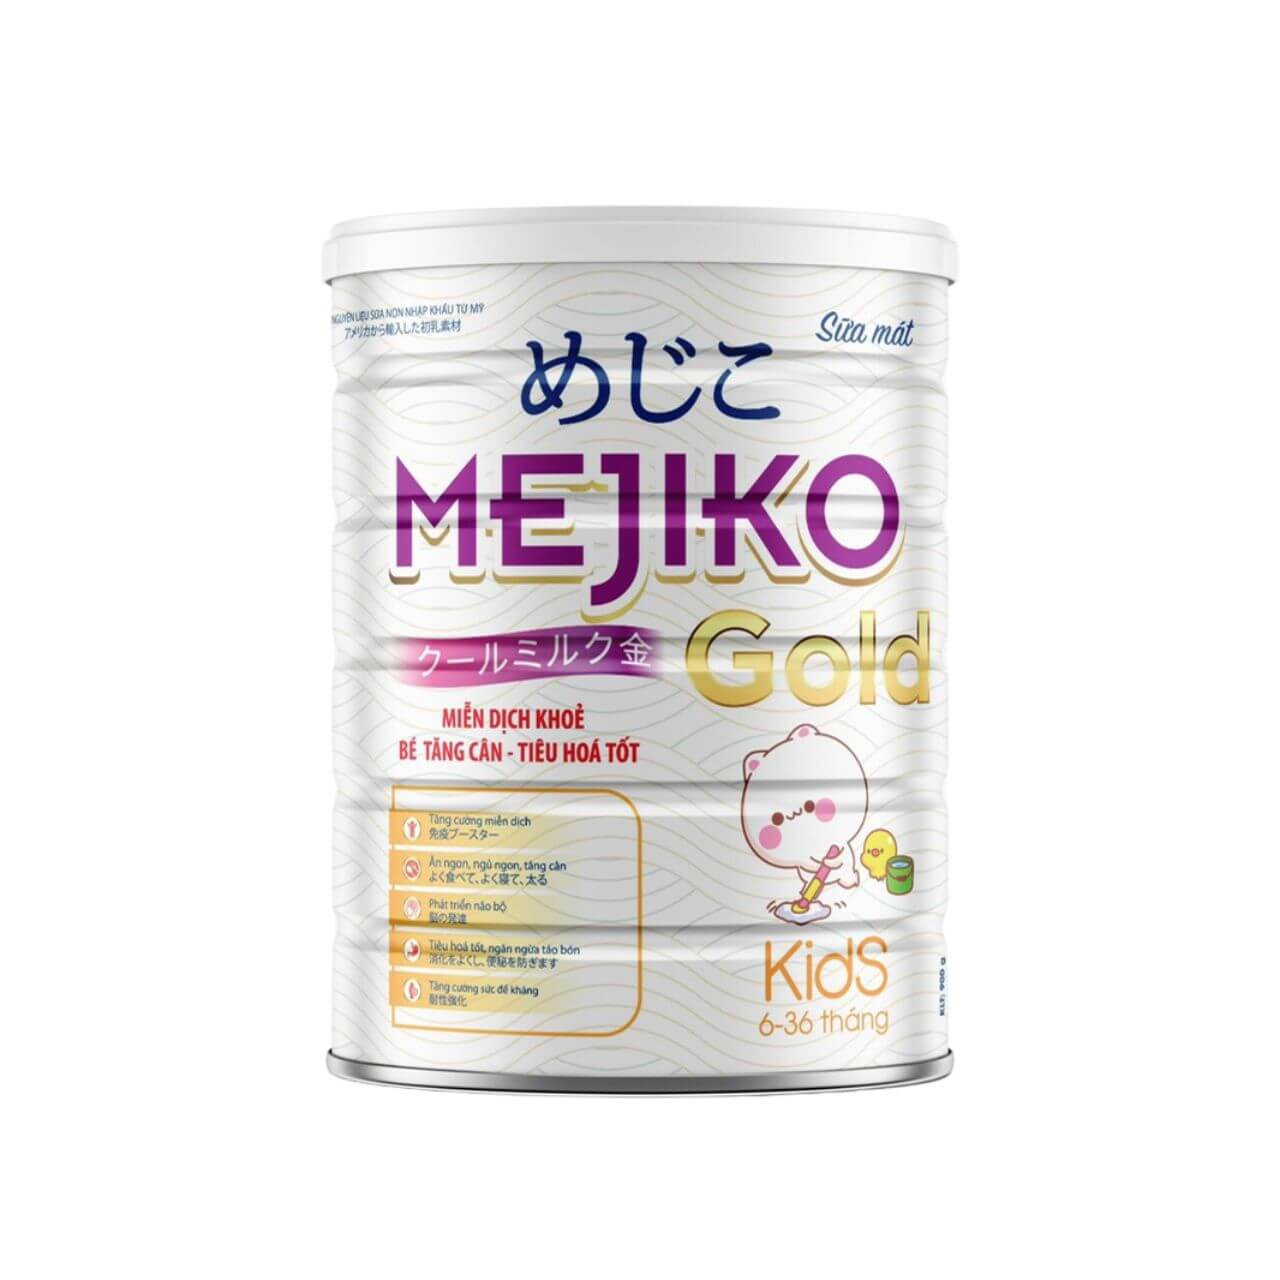 Sữa Mejiko Gold Kids